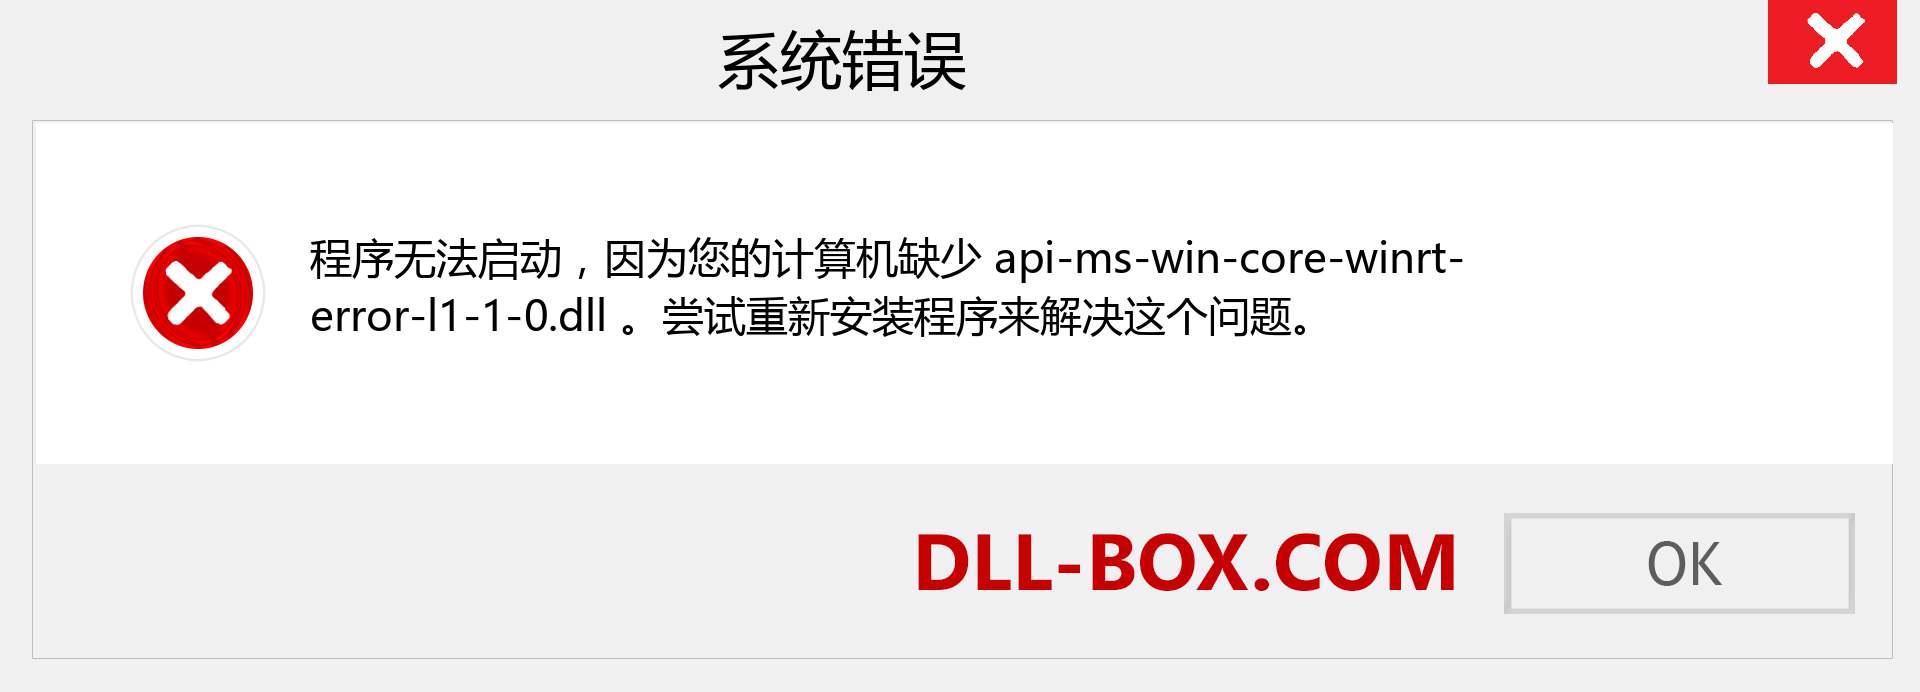 api-ms-win-core-winrt-error-l1-1-0.dll 文件丢失？。 适用于 Windows 7、8、10 的下载 - 修复 Windows、照片、图像上的 api-ms-win-core-winrt-error-l1-1-0 dll 丢失错误